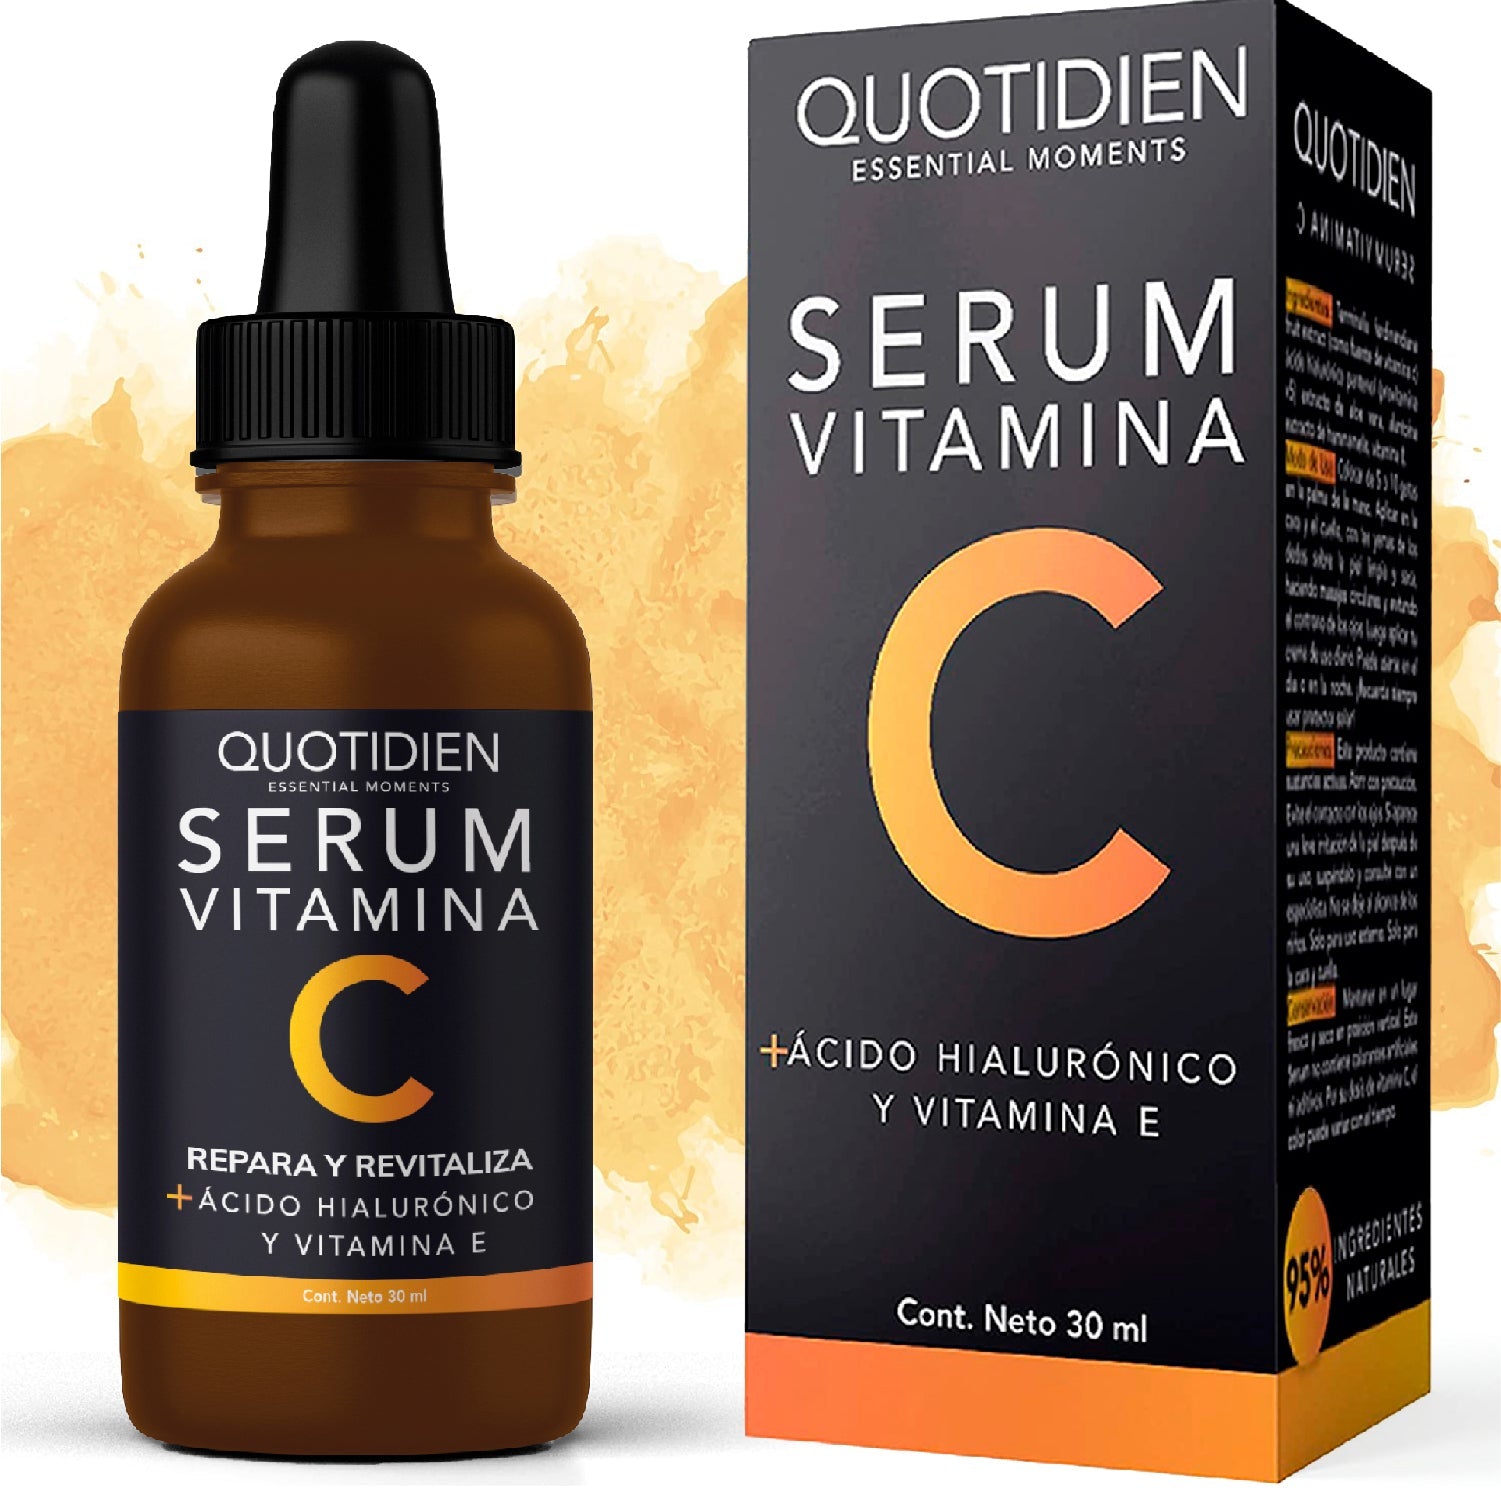 Serum Vitamina C + Ácido Hialurónico + Vitamina E- 95% Ingredientes Naturales - Para Todo Tipo de Piel - 30ml (Mayoreo)